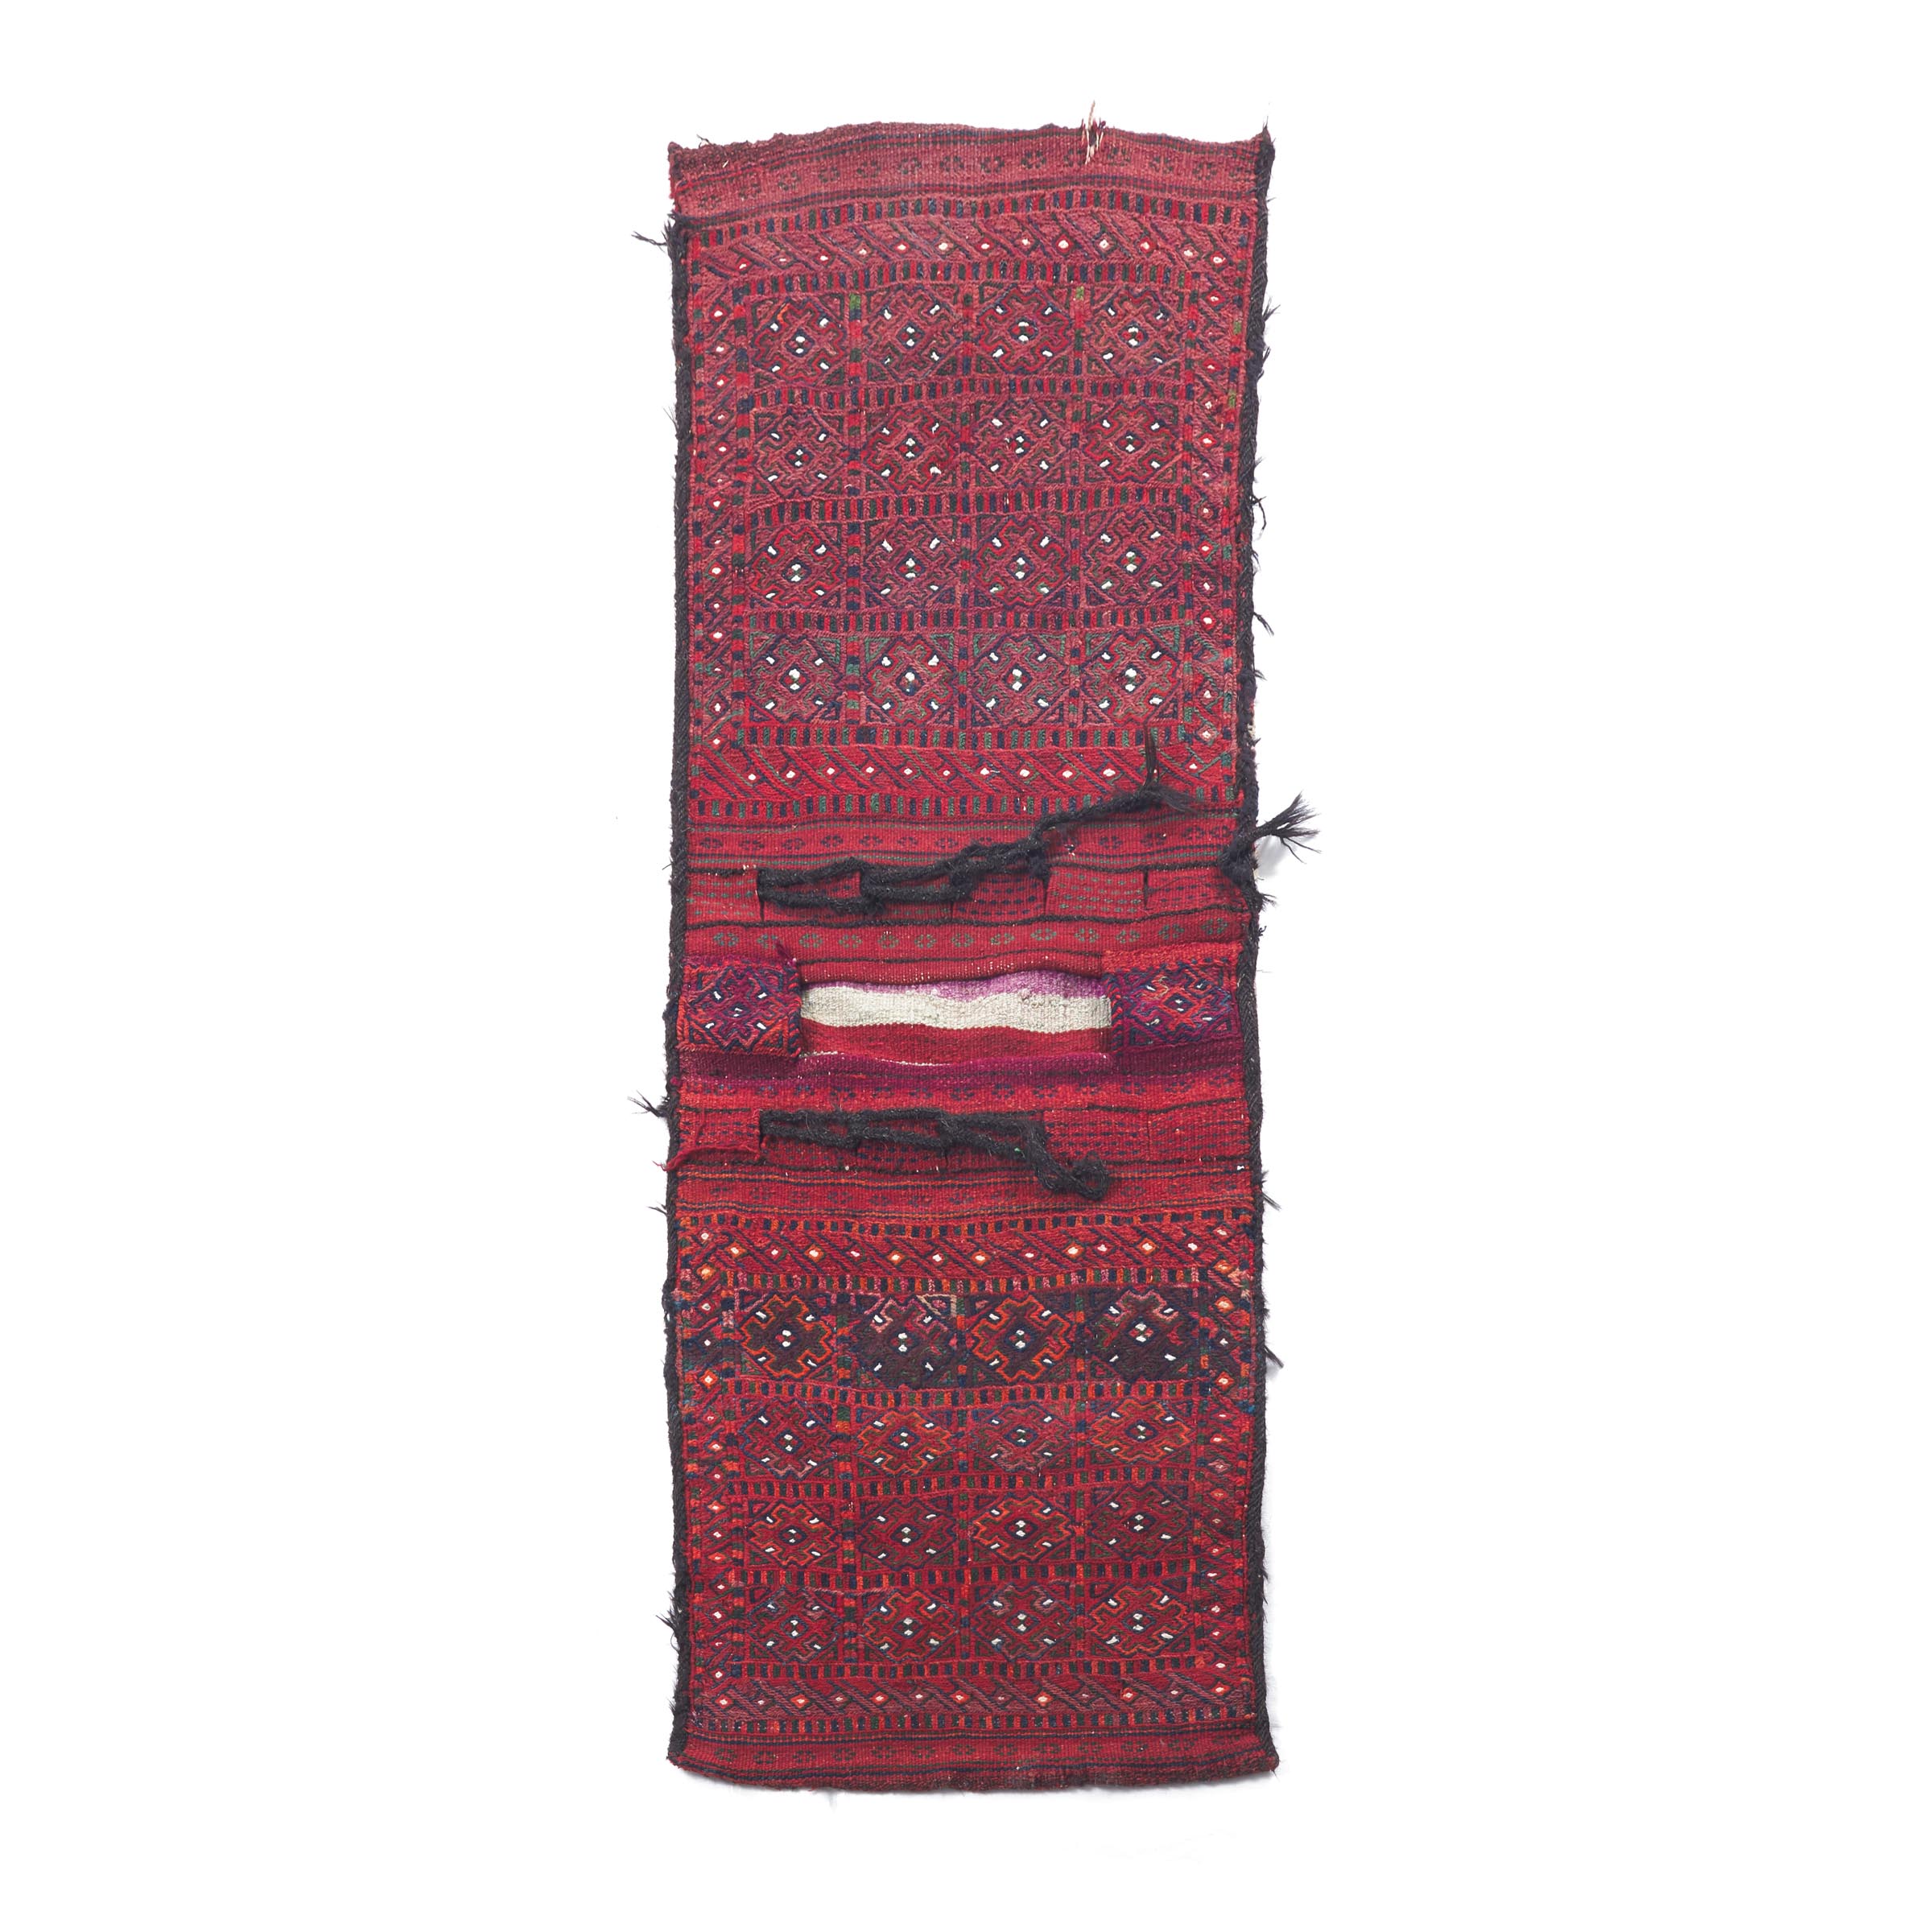 Afghan Flat Woven Saddle Bag, late 20th century